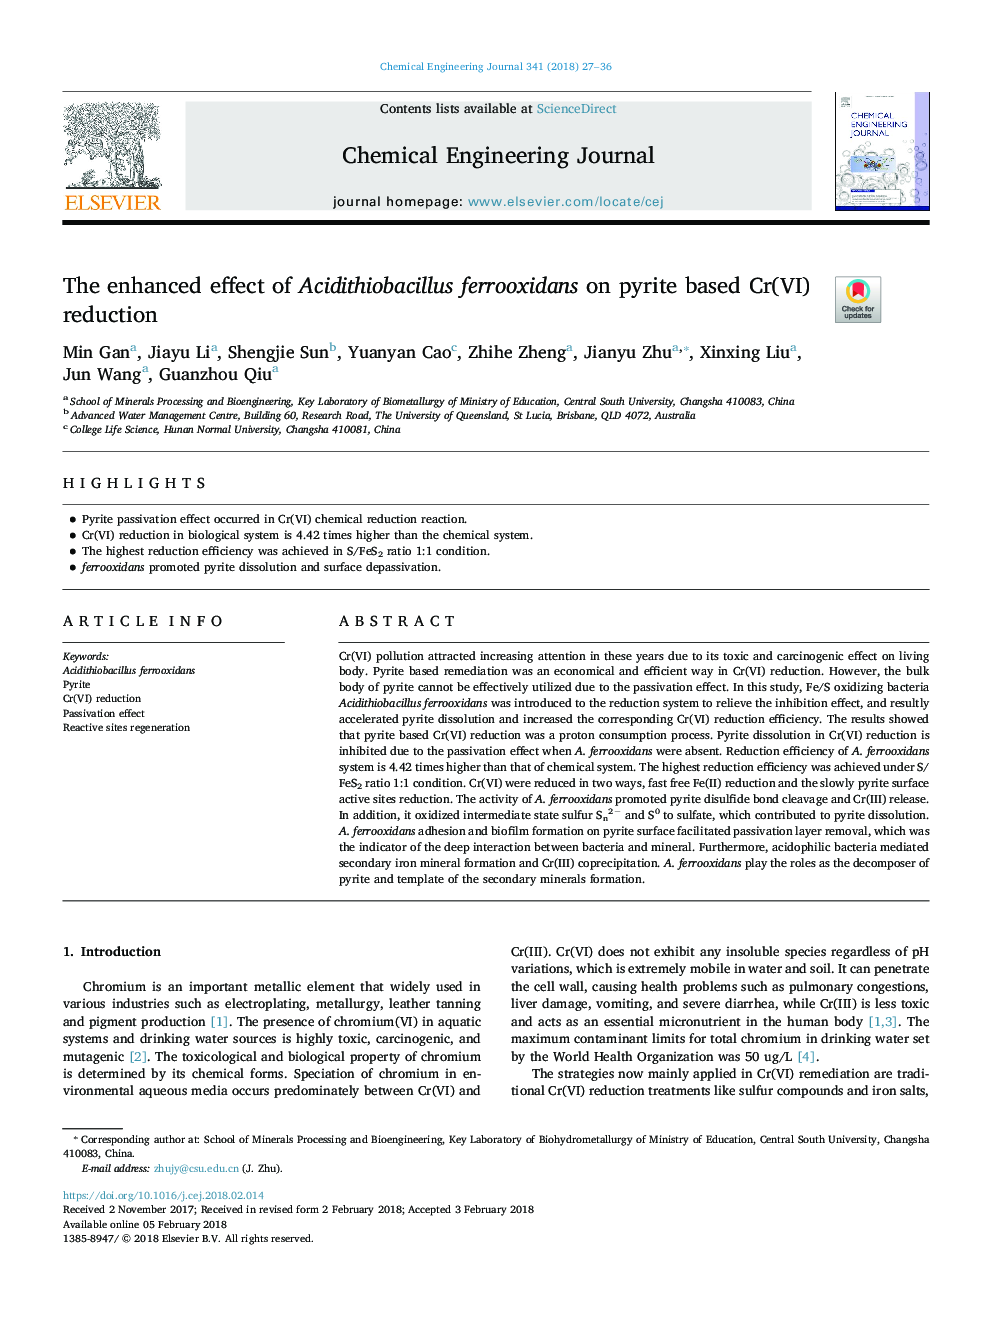 The enhanced effect of Acidithiobacillus ferrooxidans on pyrite based Cr(VI) reduction